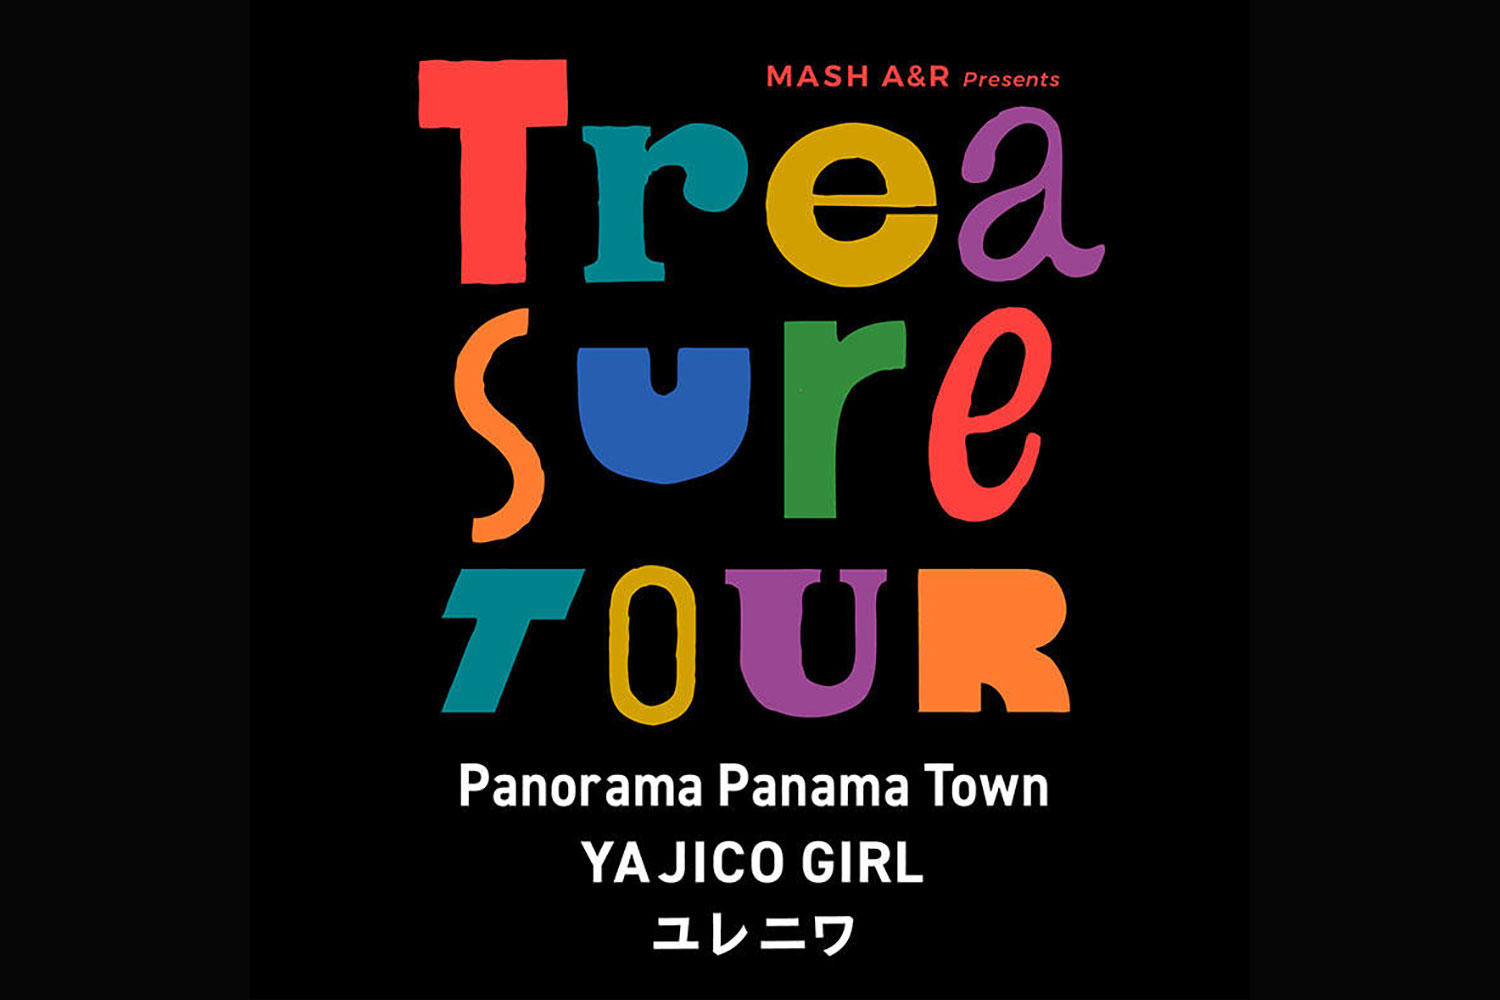 Panorama Panama Town・YAJICO GIRL・ユレニワ出演のMASH A&R主催ツアー、メインビジュアル公開！